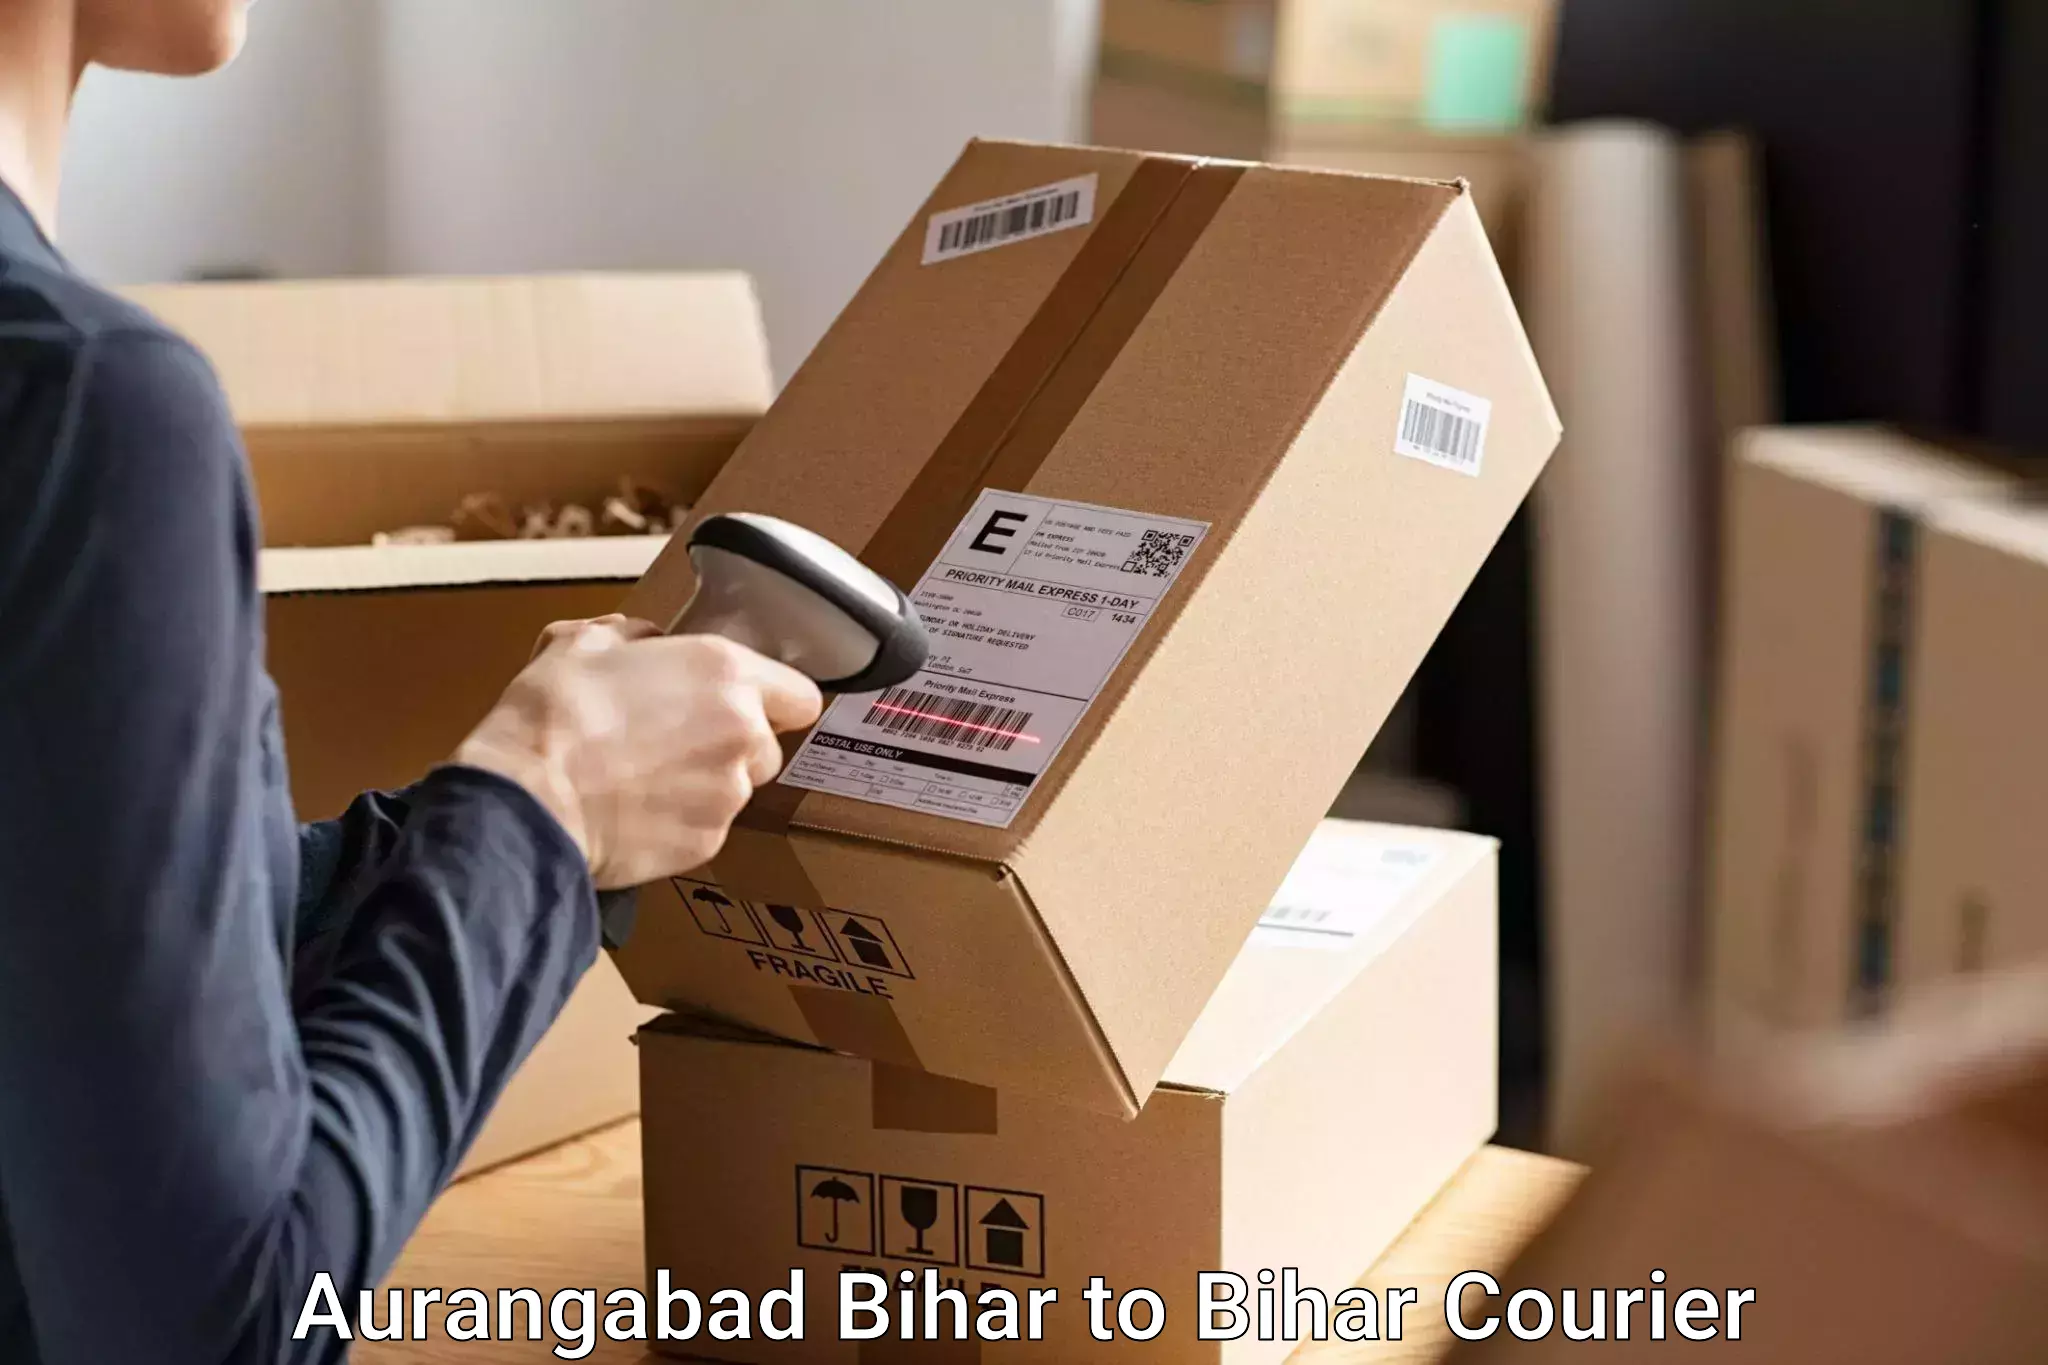 Baggage shipping service Aurangabad Bihar to Rajgir